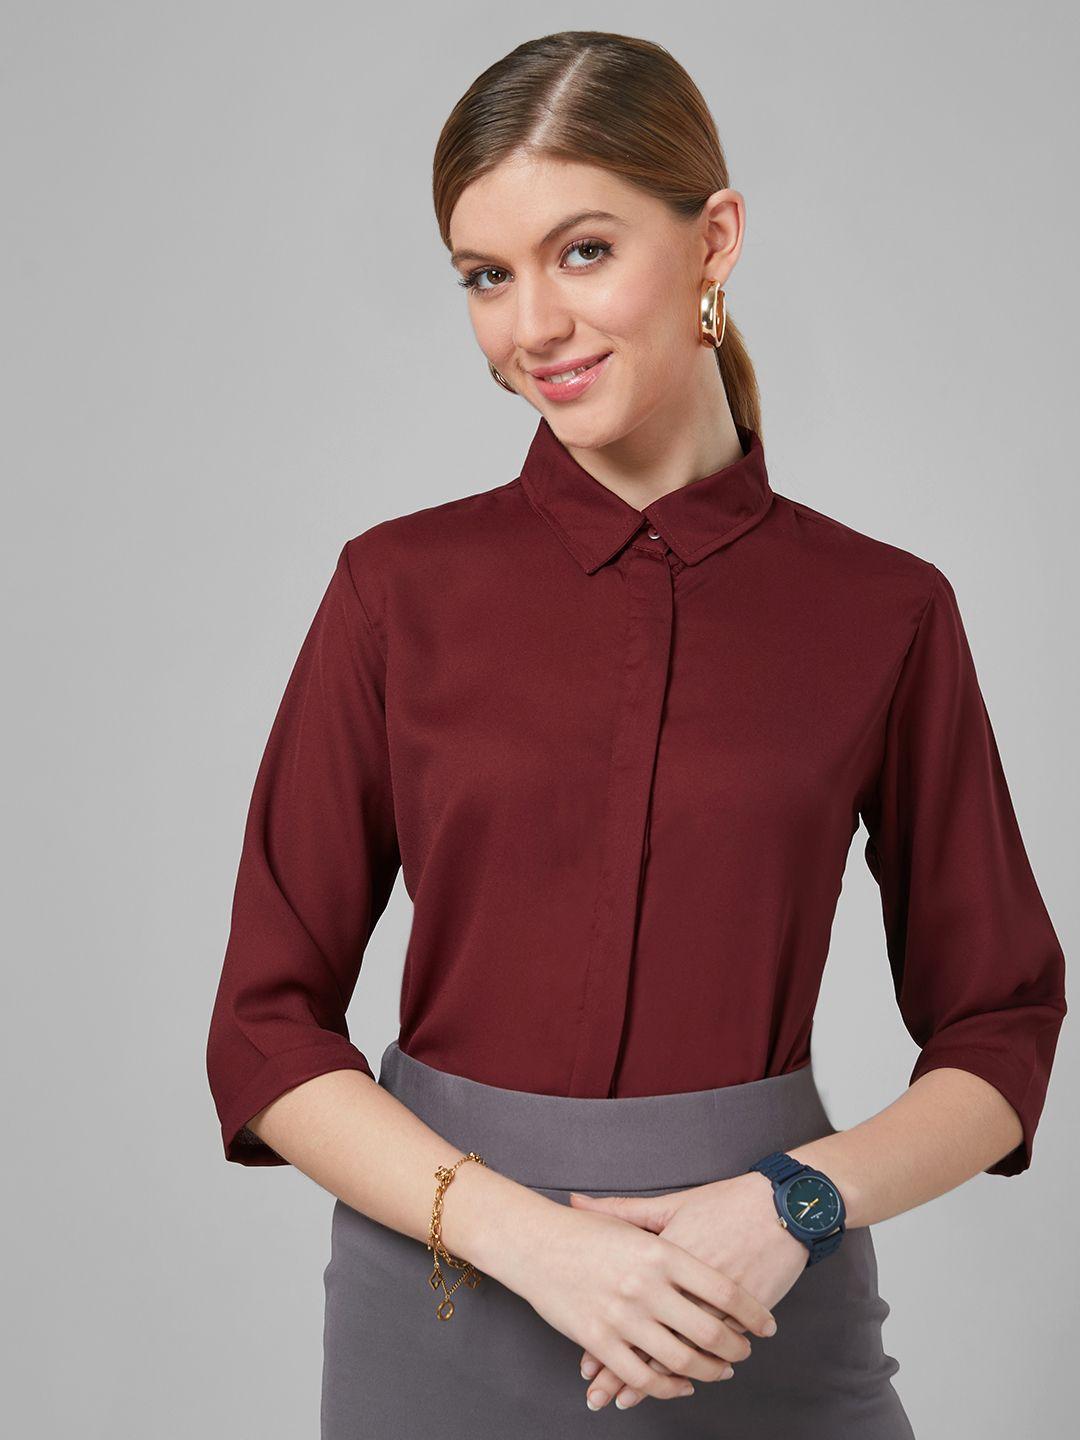 style-quotient-women-smart-formal-shirt